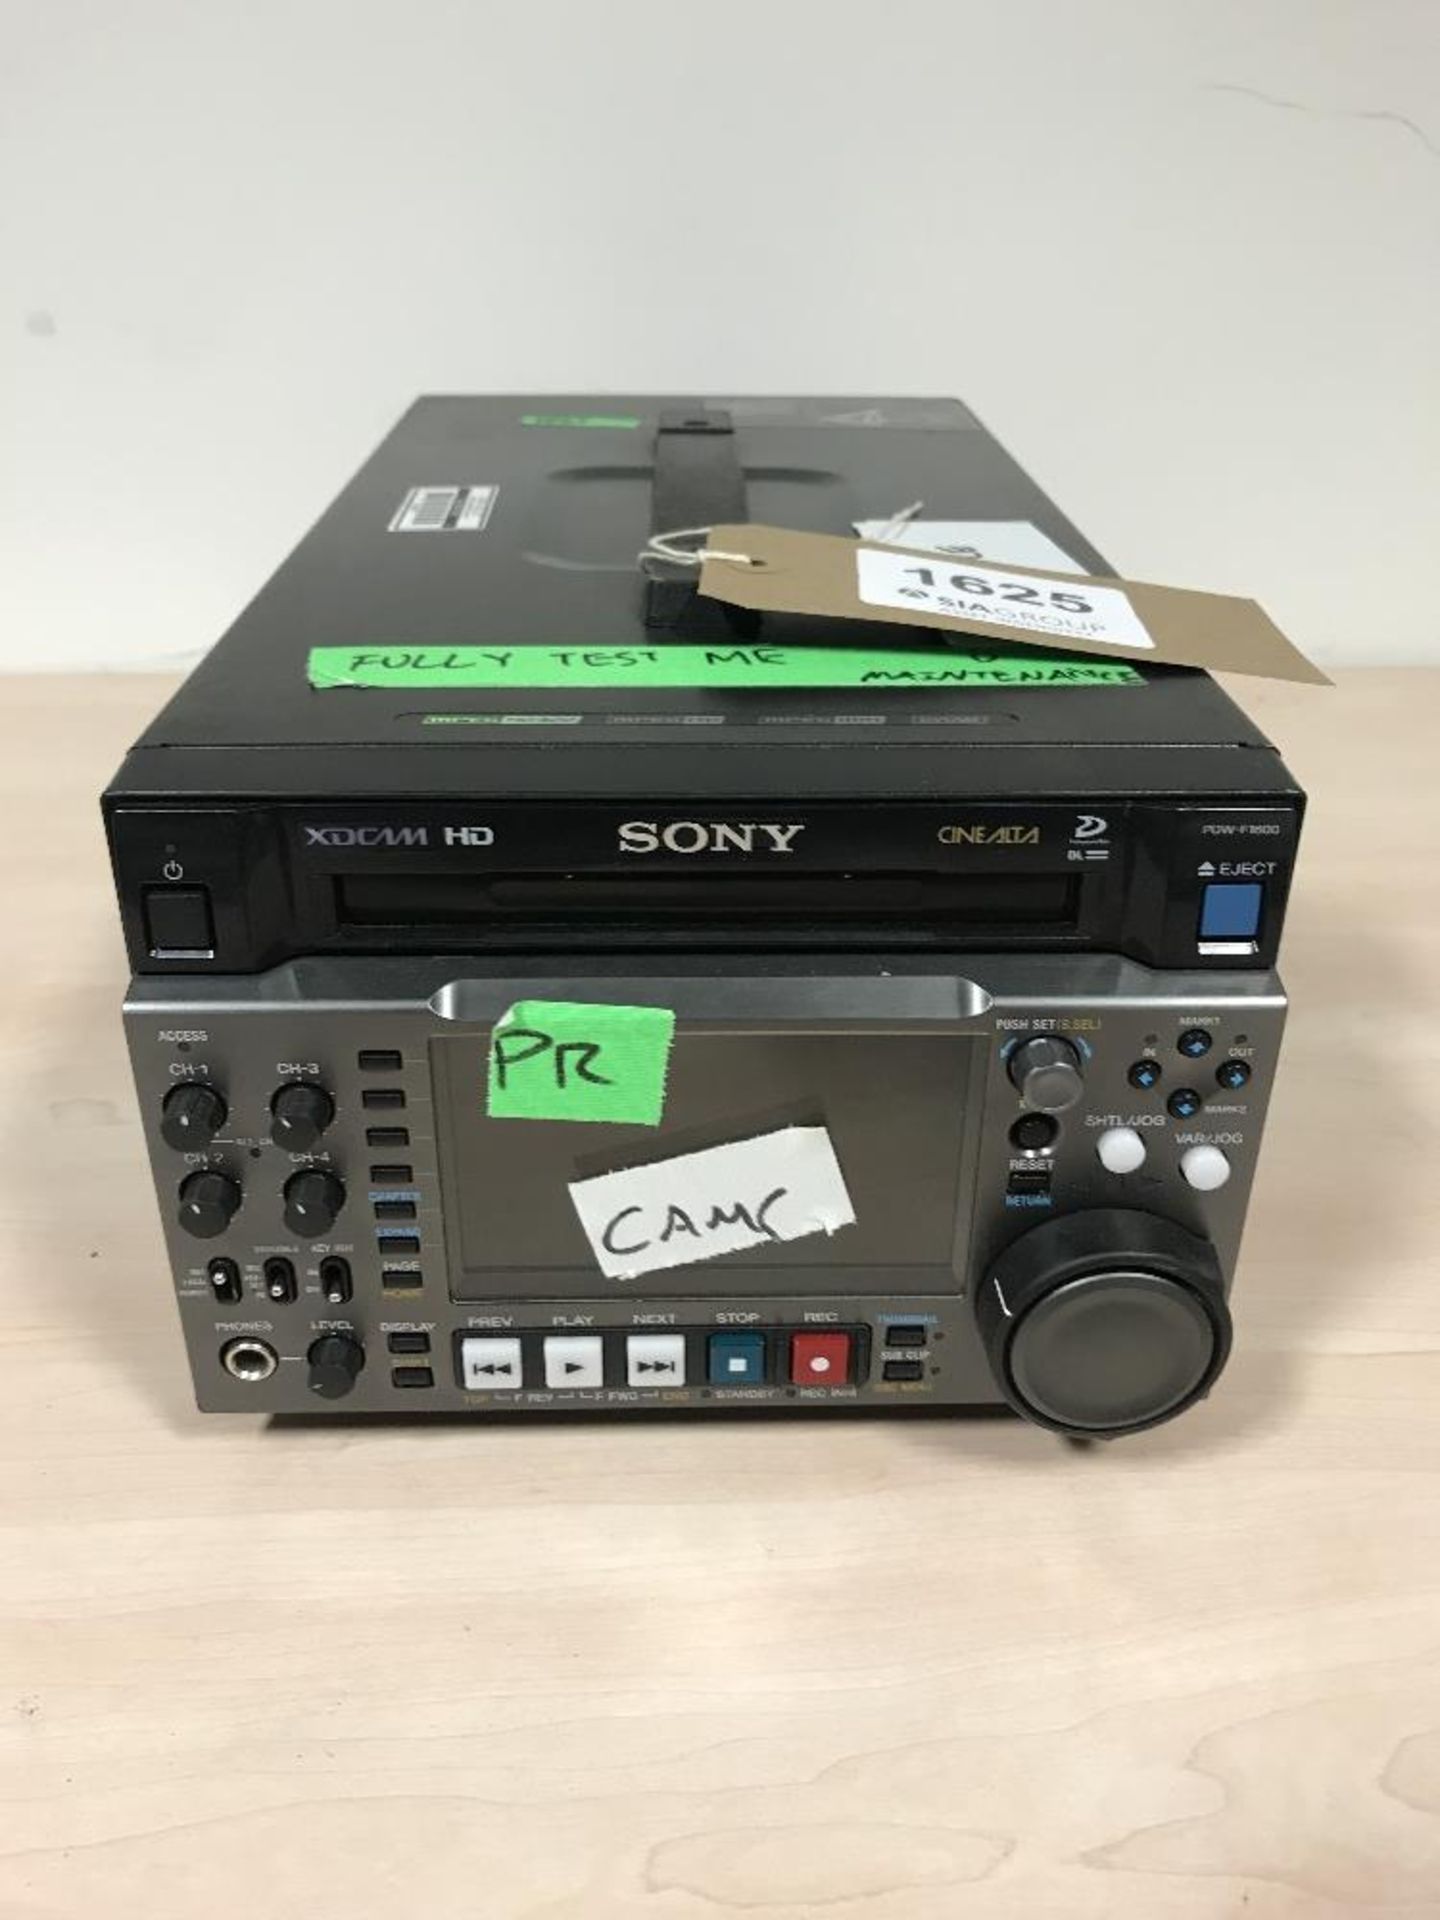 Sony PDW-F1600 Digital Video Recorder